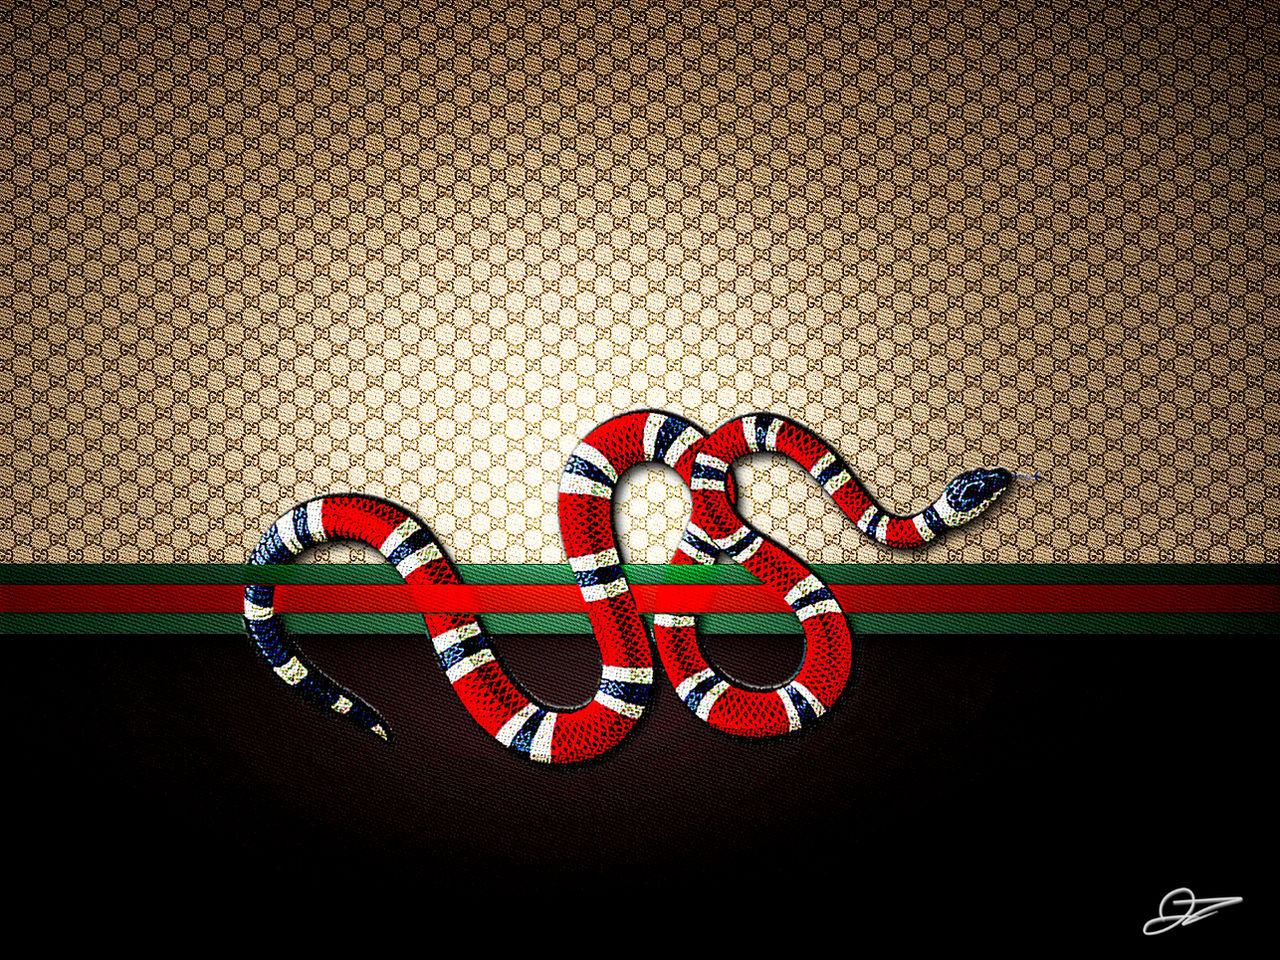 Gucci Slithering Snake iPhone Wallpaper J Farhat by JFarhat on DeviantArt